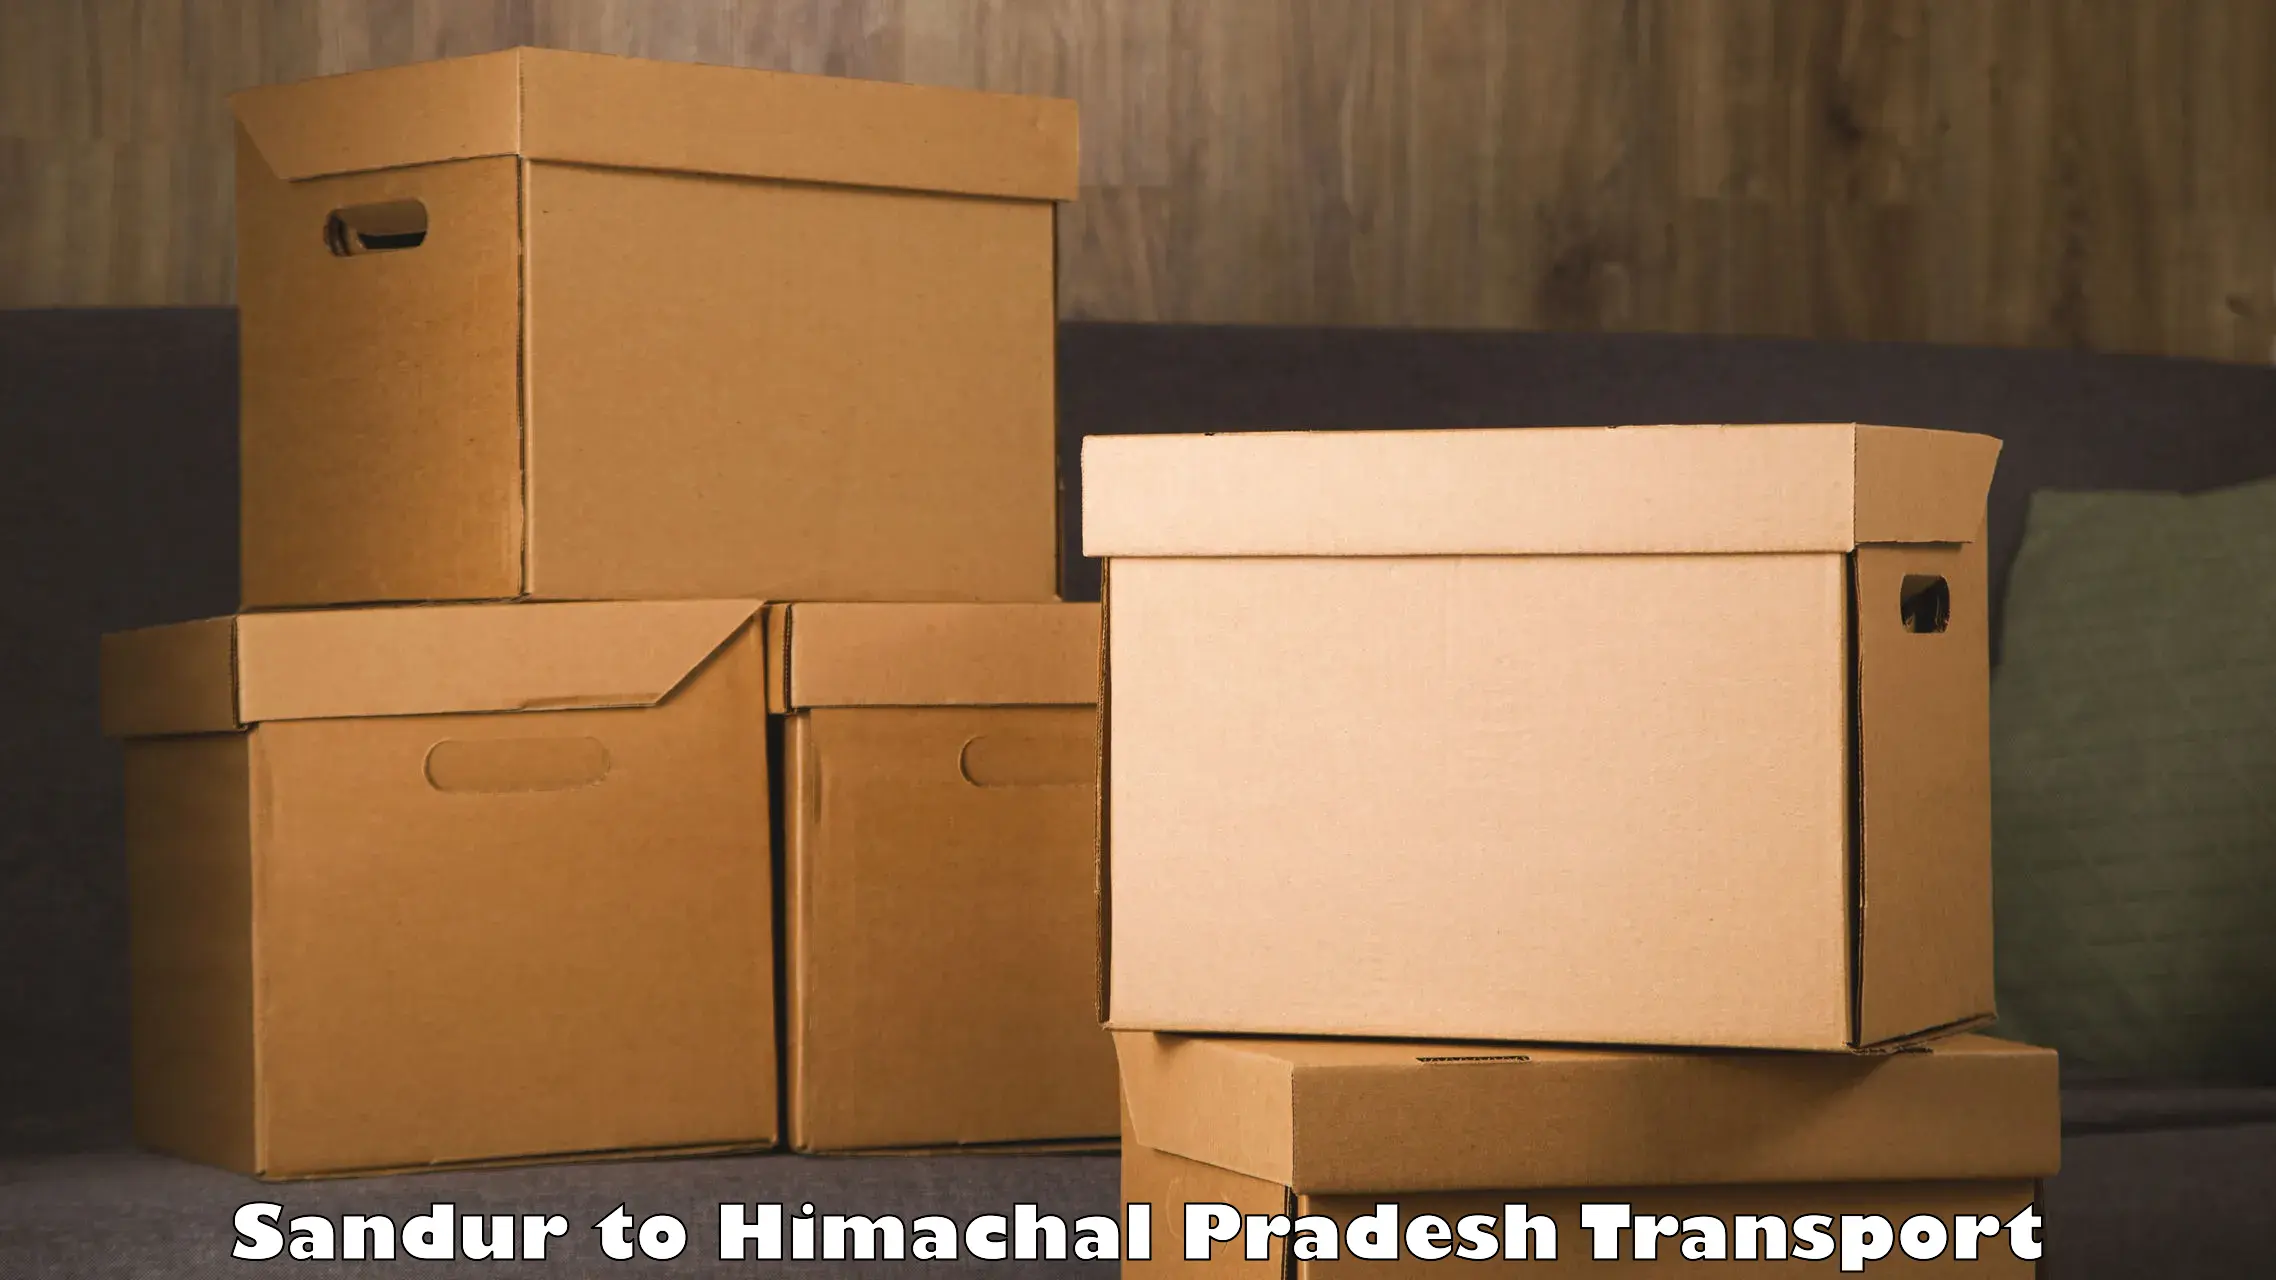 Truck transport companies in India Sandur to Himachal Pradesh